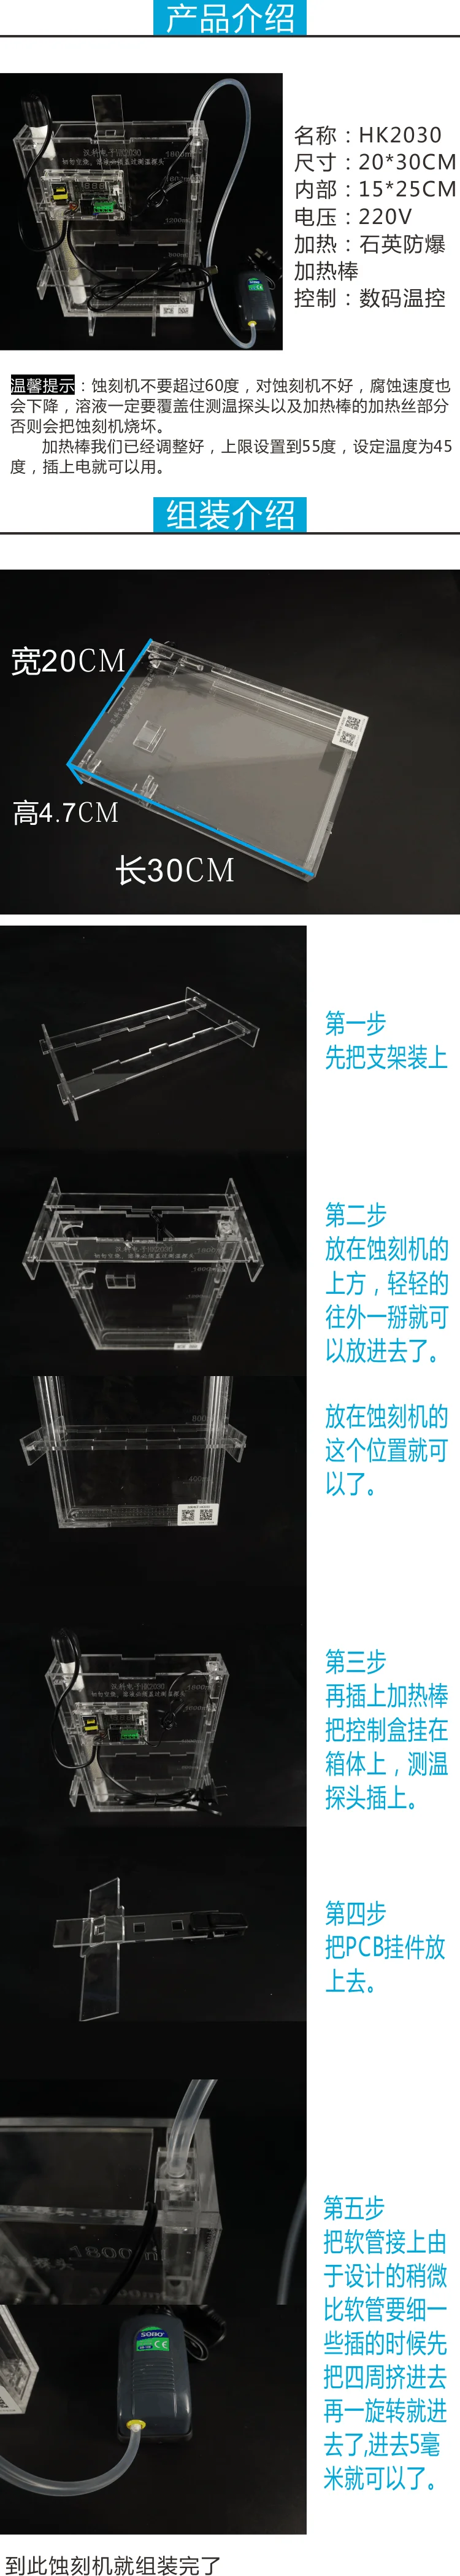 PCB изготовление HK2030 Etcher PCB Изготовление Diy металла коррозии PCB оборудование для изготовления